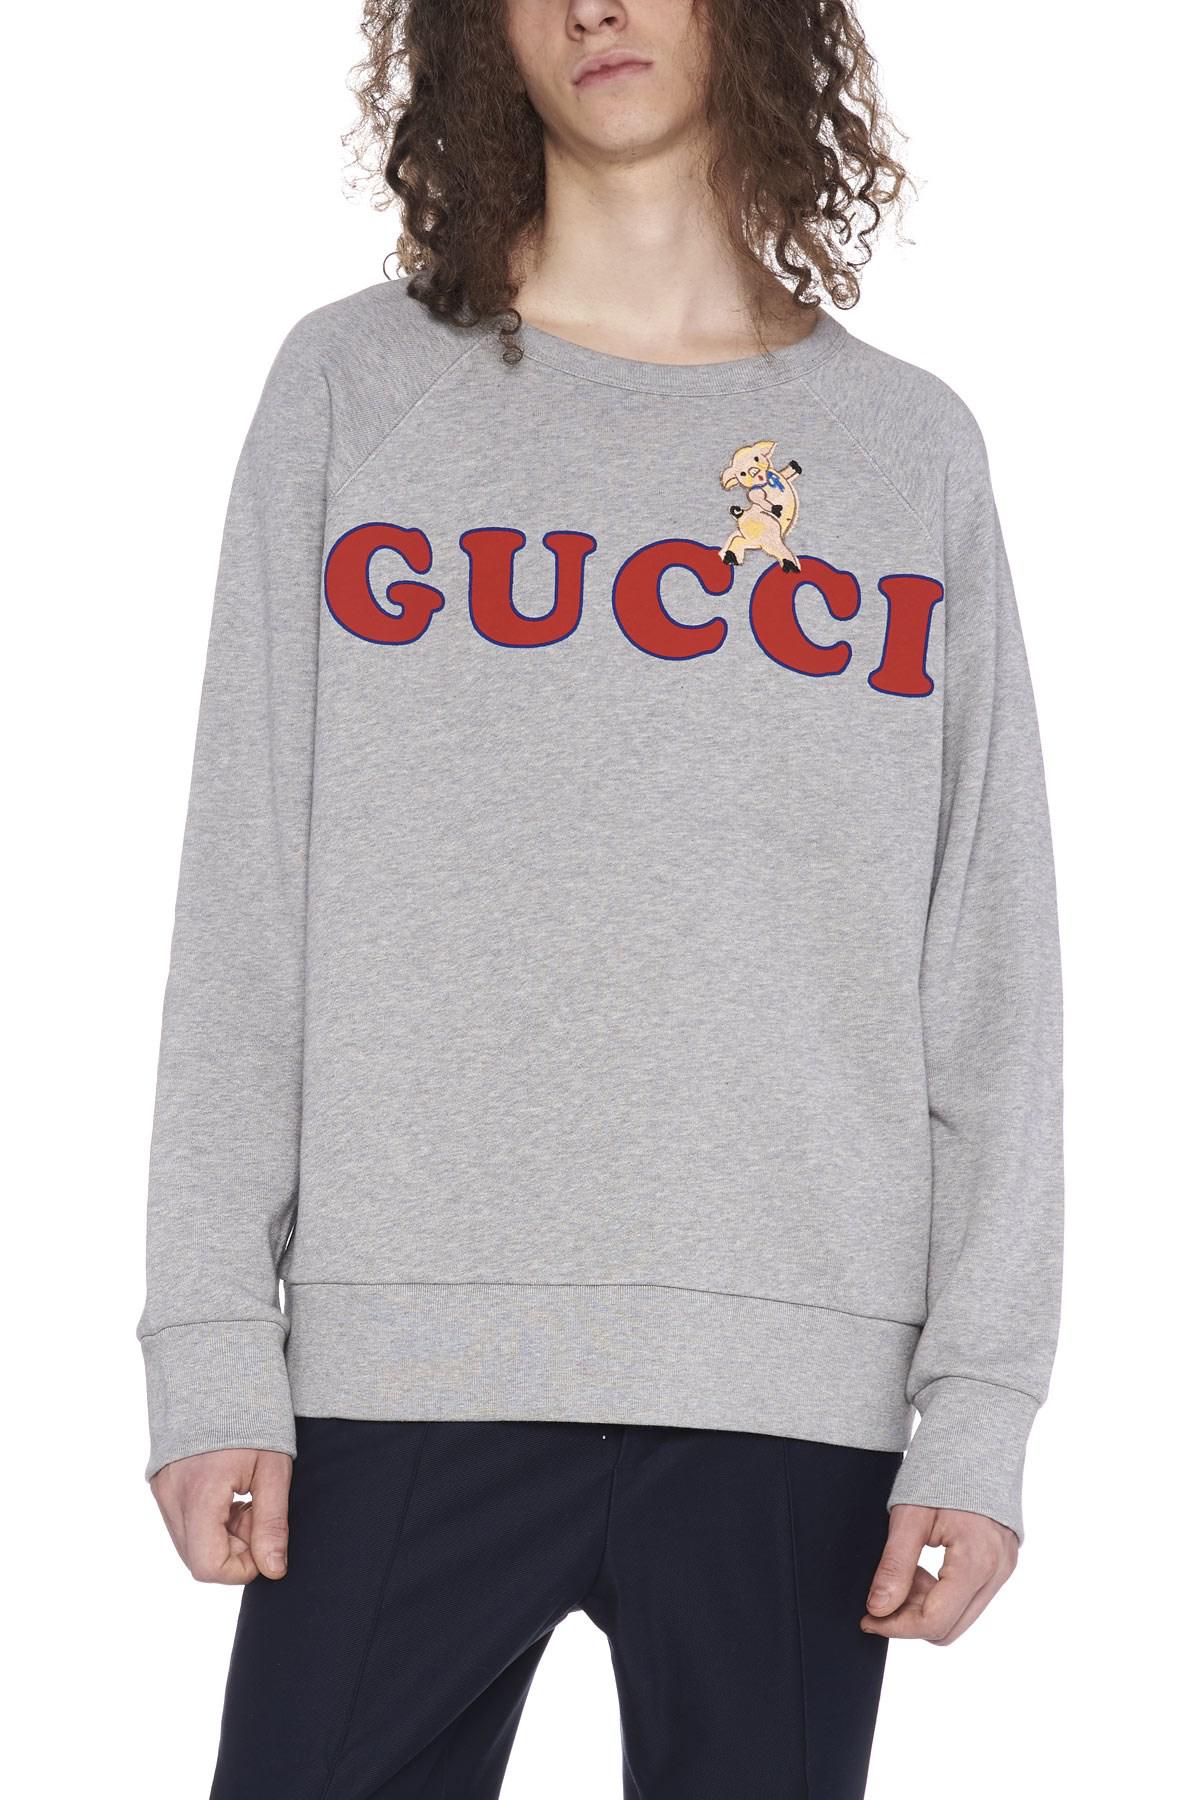 Gucci Cotton 'dancing Pig' Sweatshirt 